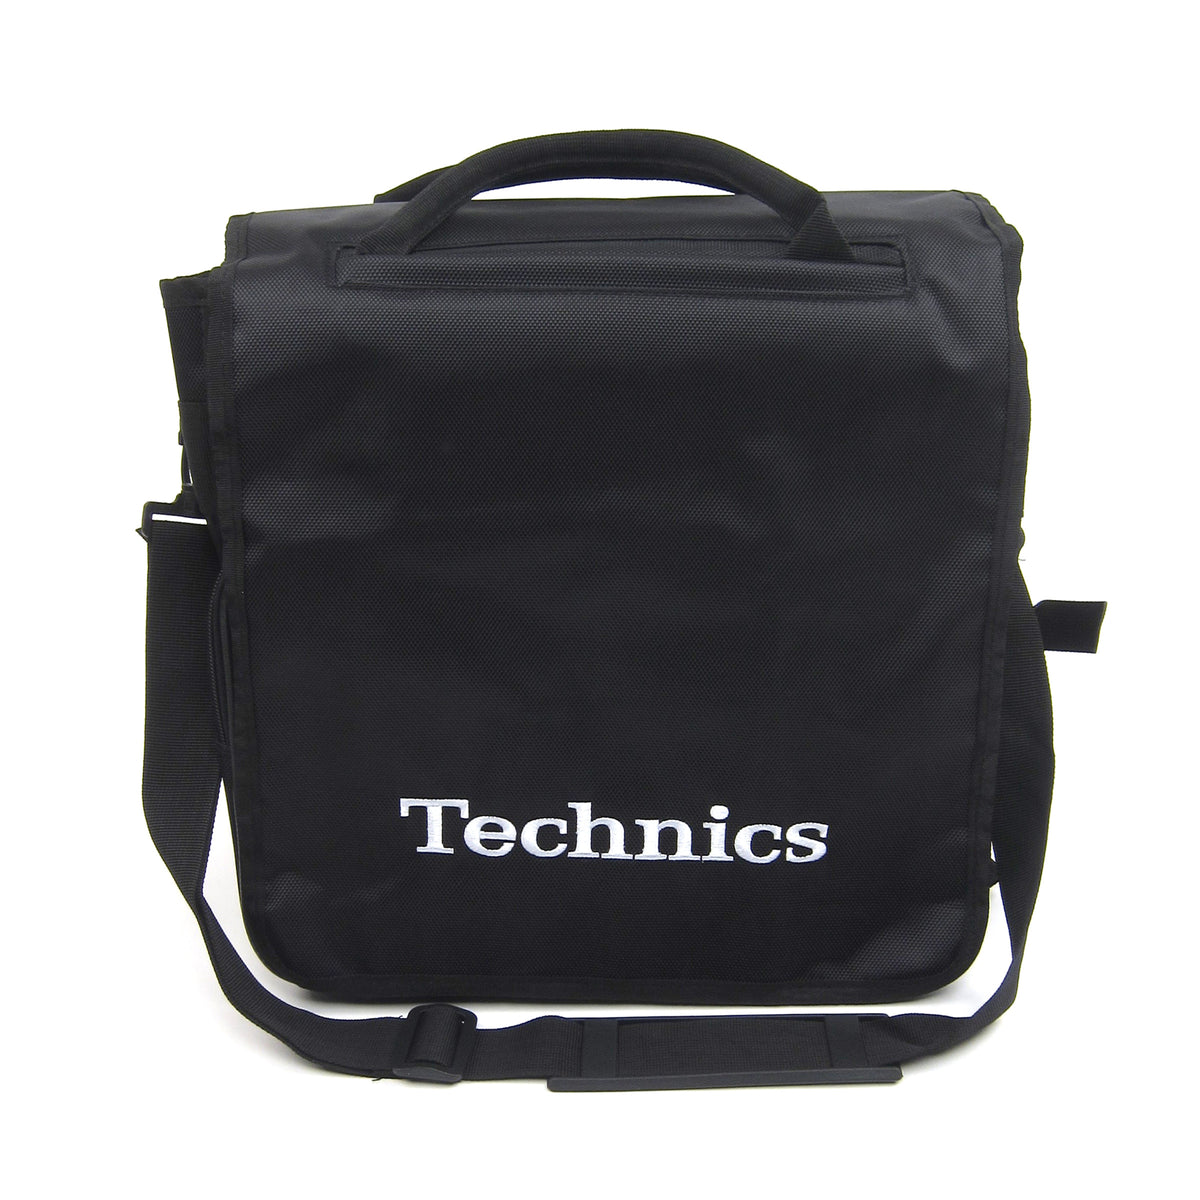 Technics Record Bag (Camo Green White Logo) at Gear4music